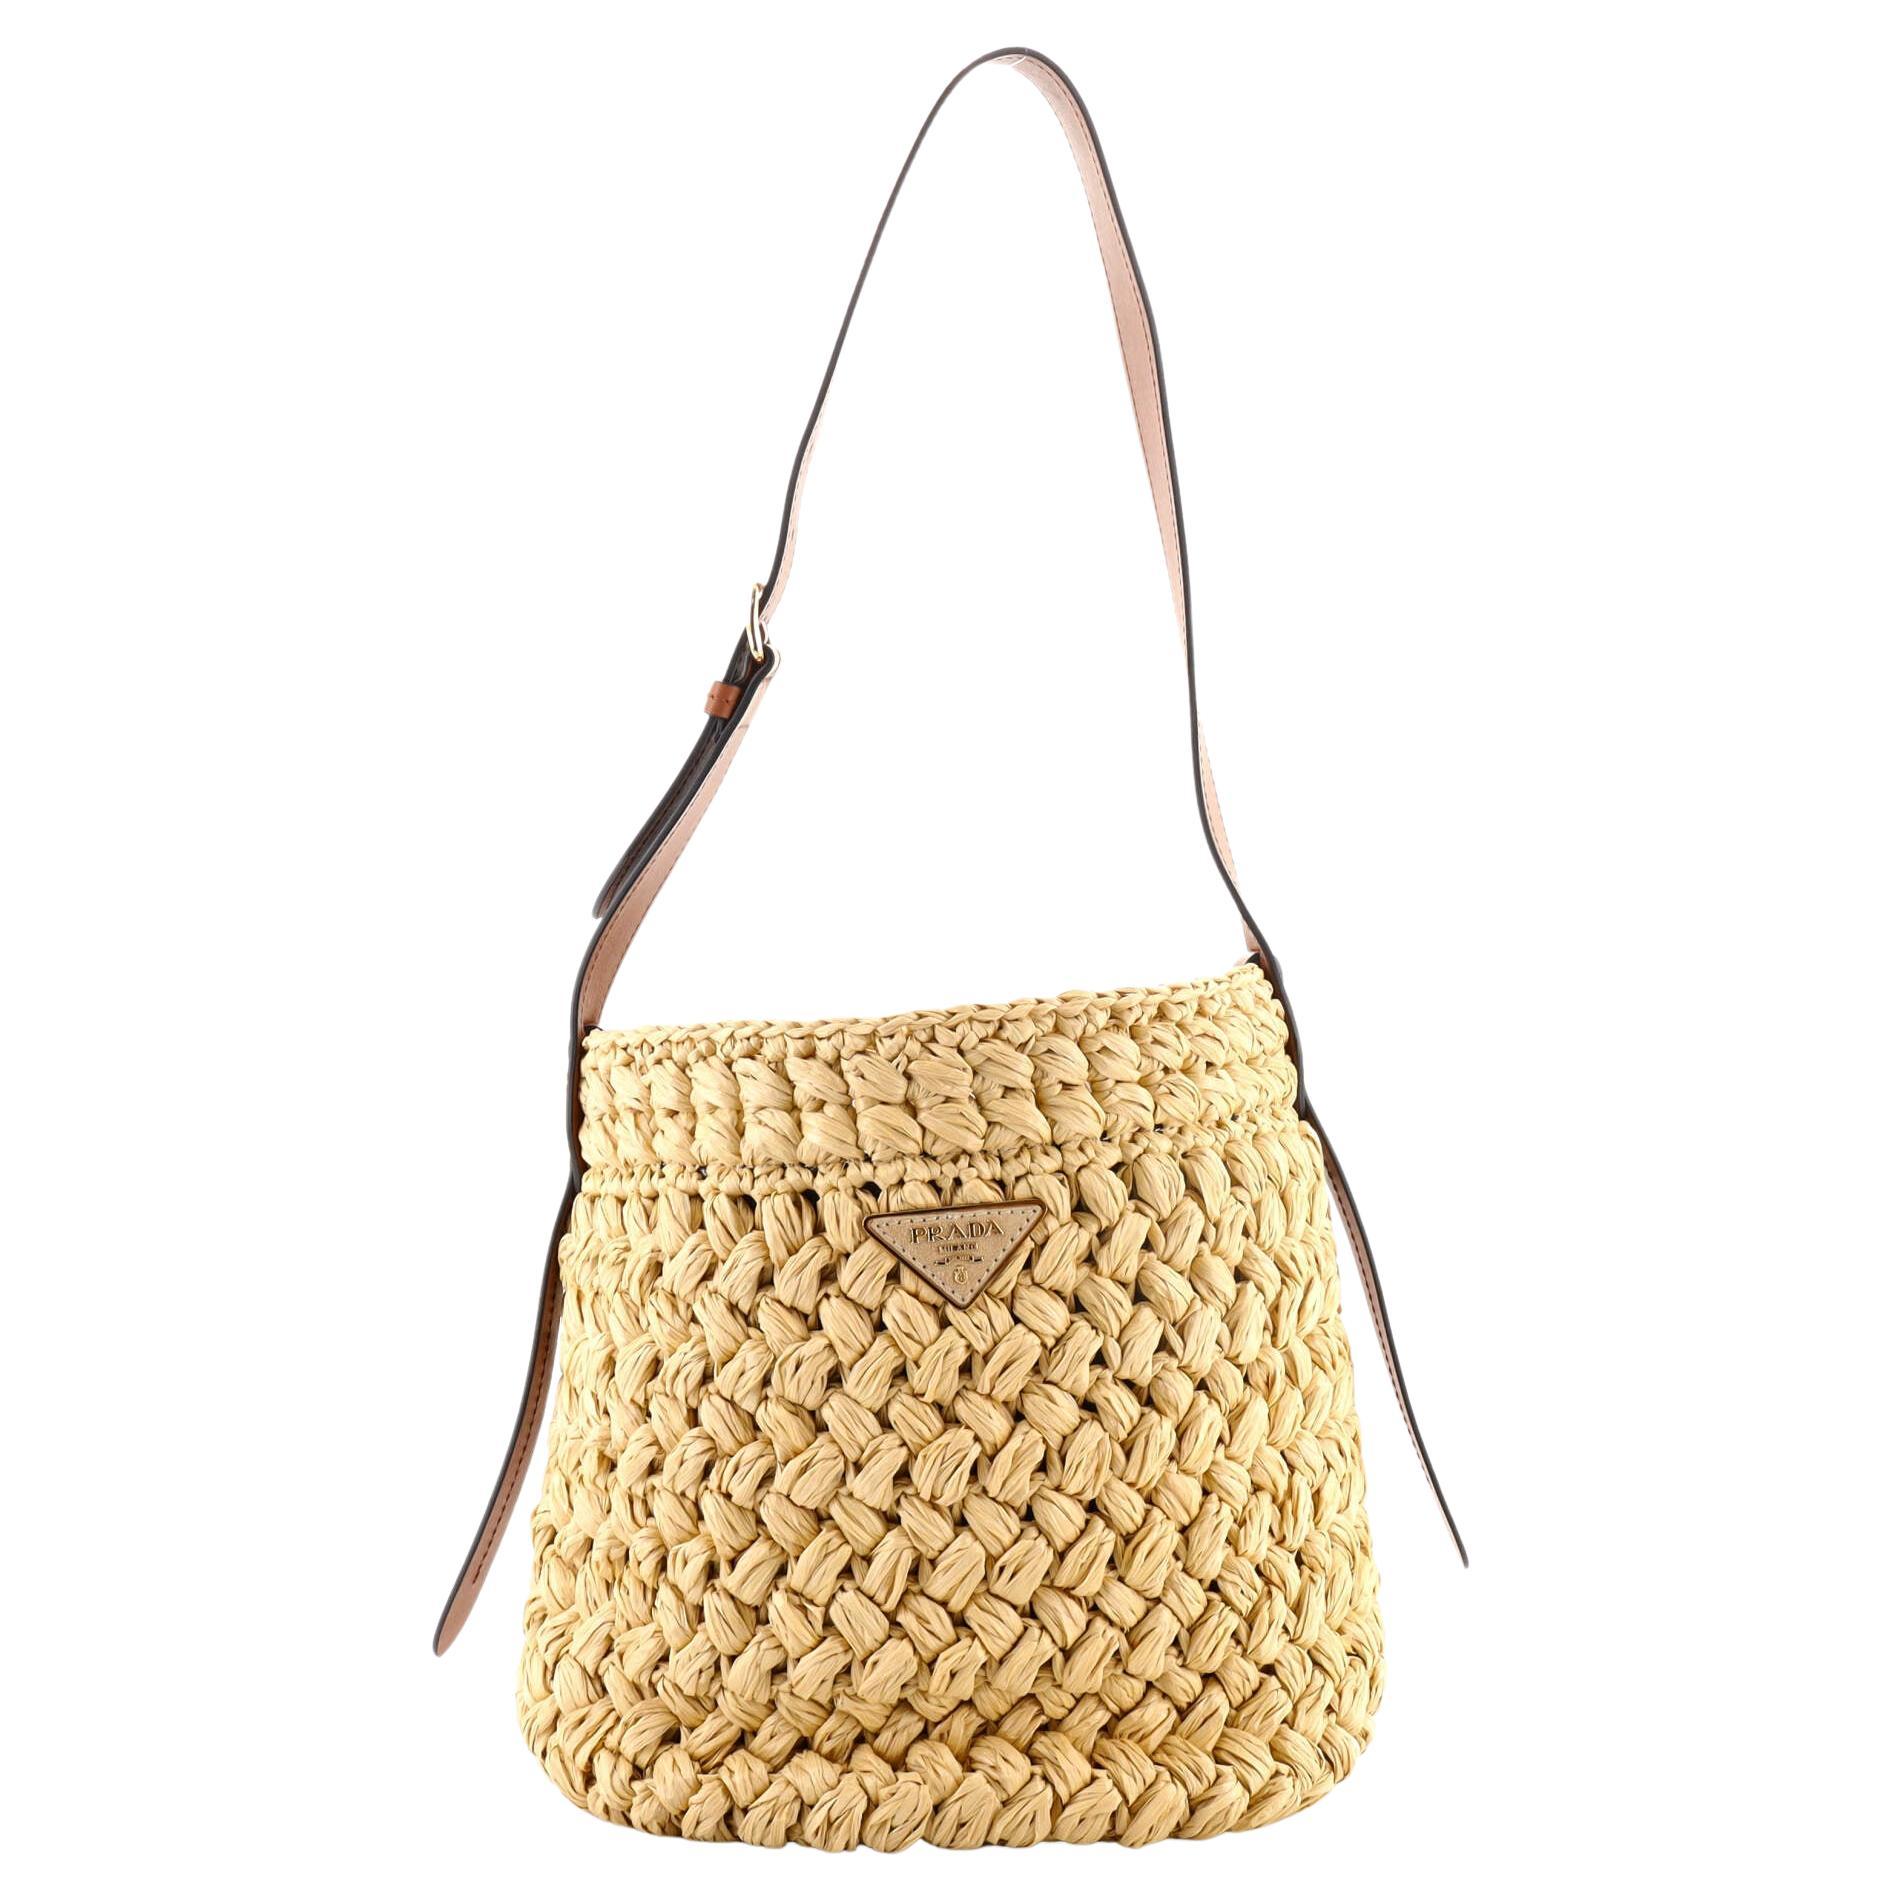 Prada Bucket Bag Crochet Raffia with Leather